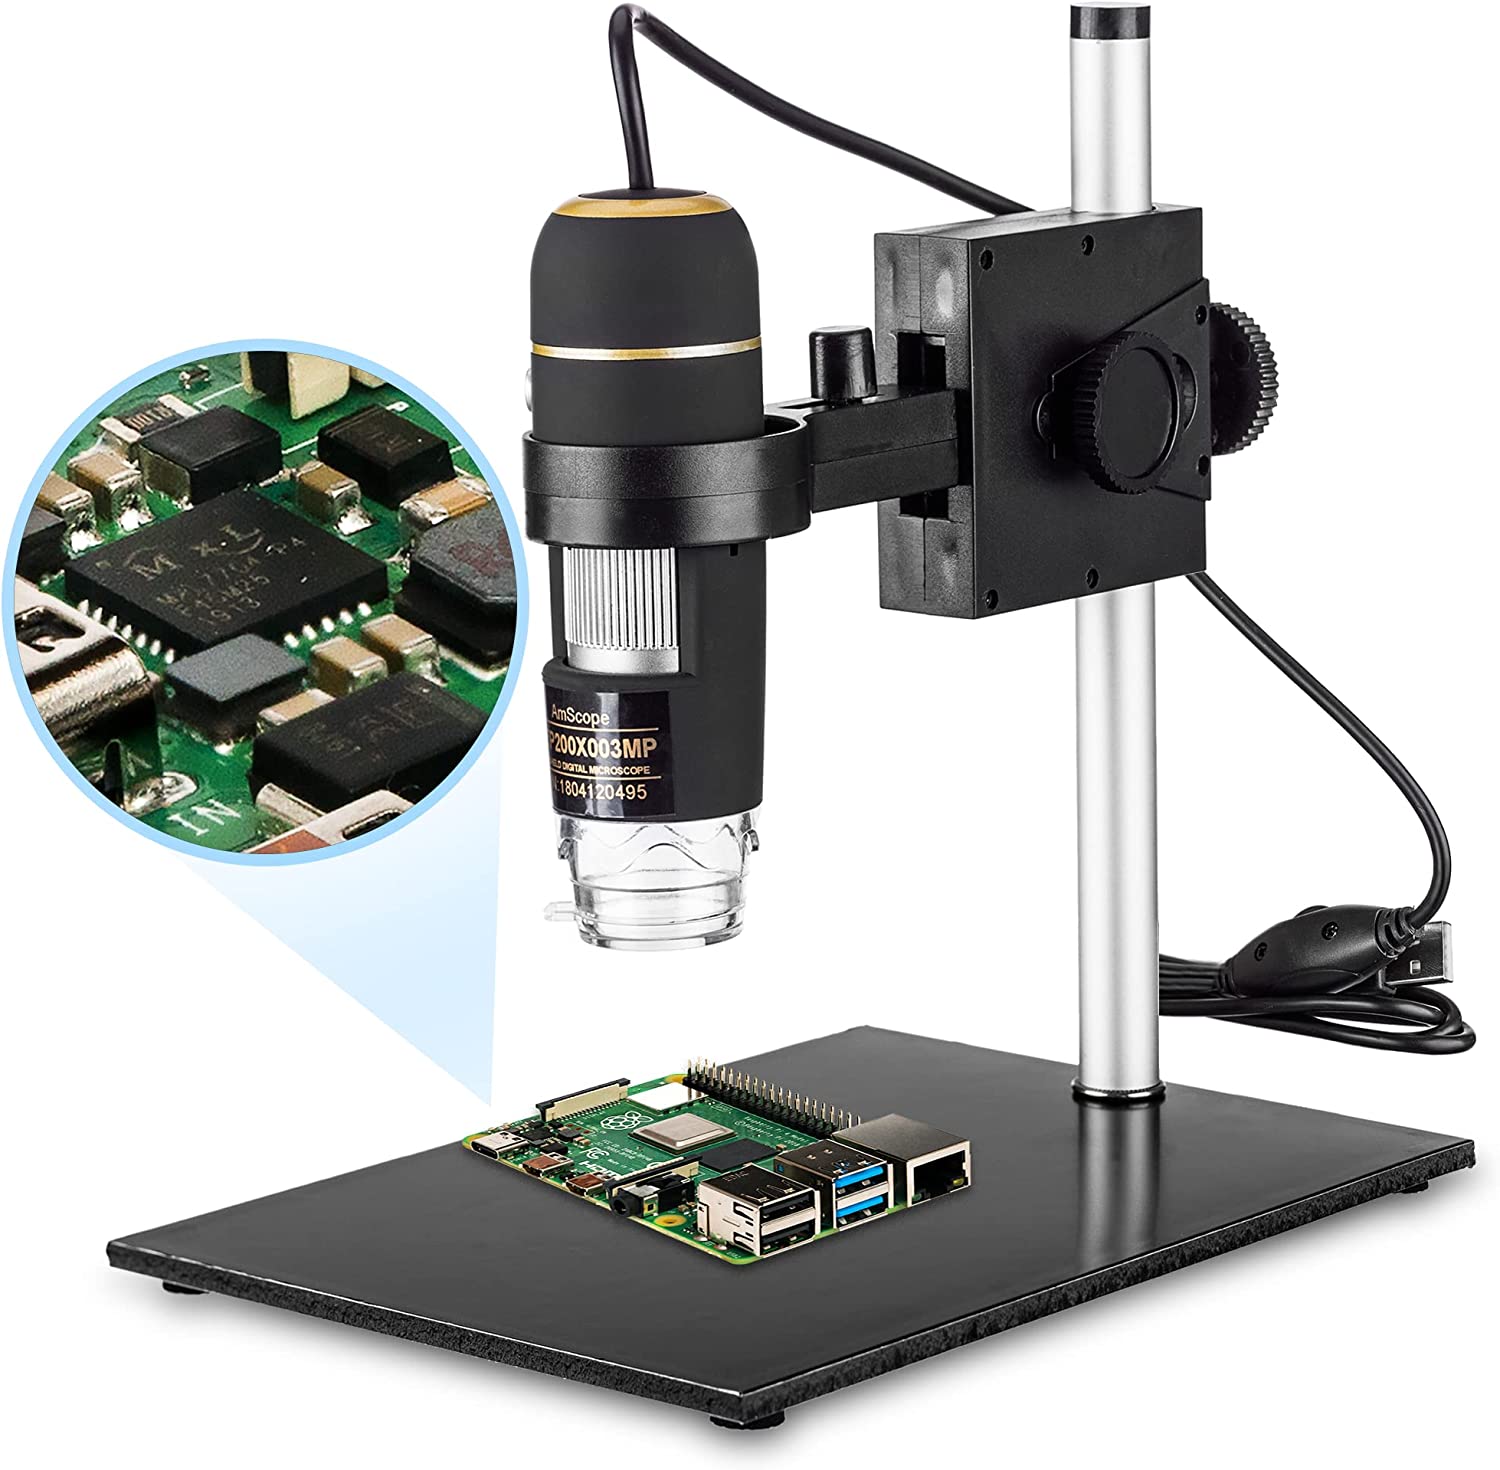 Amscope UTP200X003MP Digital 2MP USB Microscope